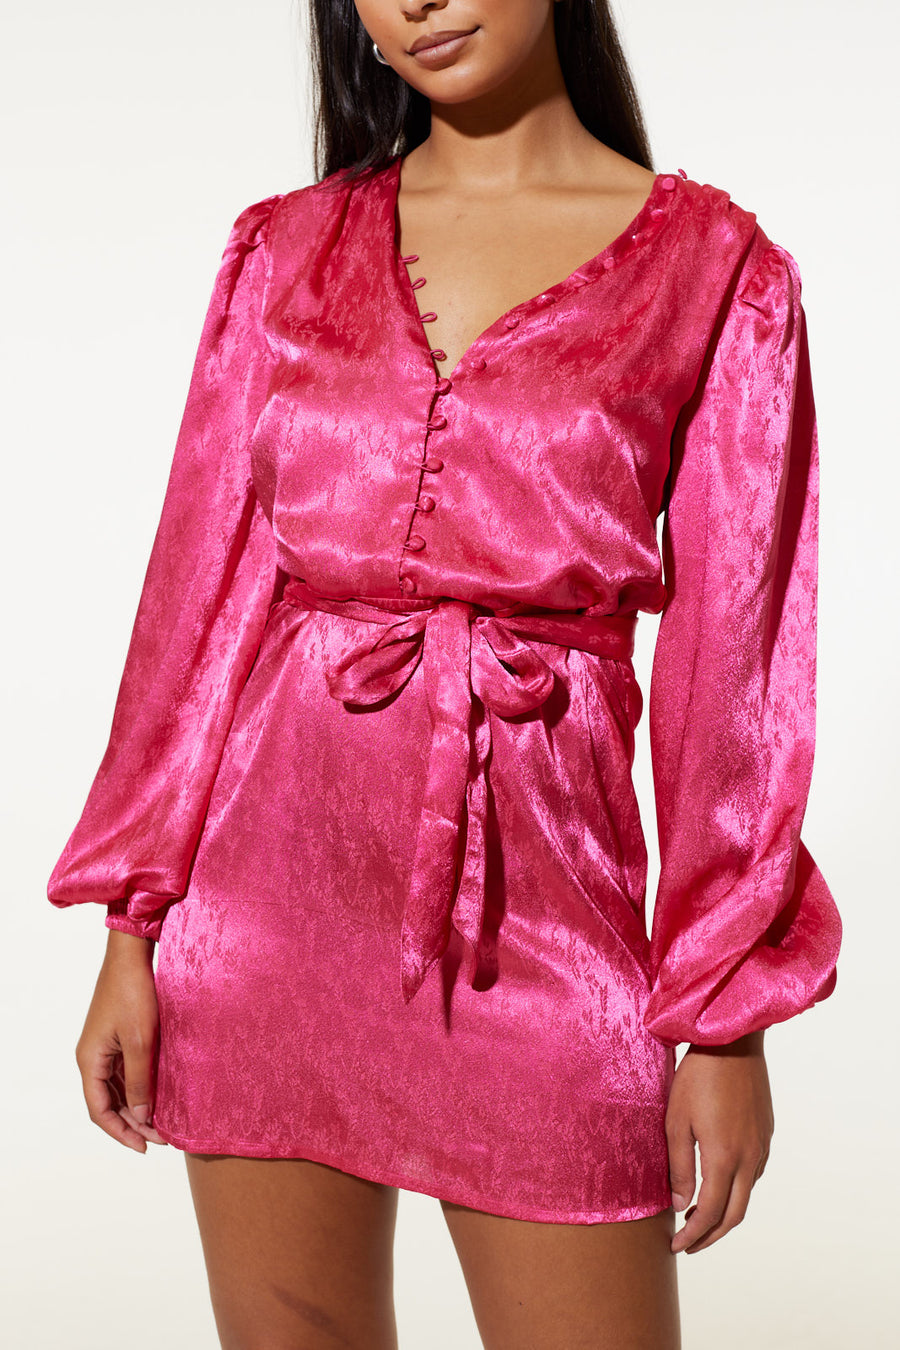 Jasmine Short Shirt Recycled Satin Dress in Hot Pink